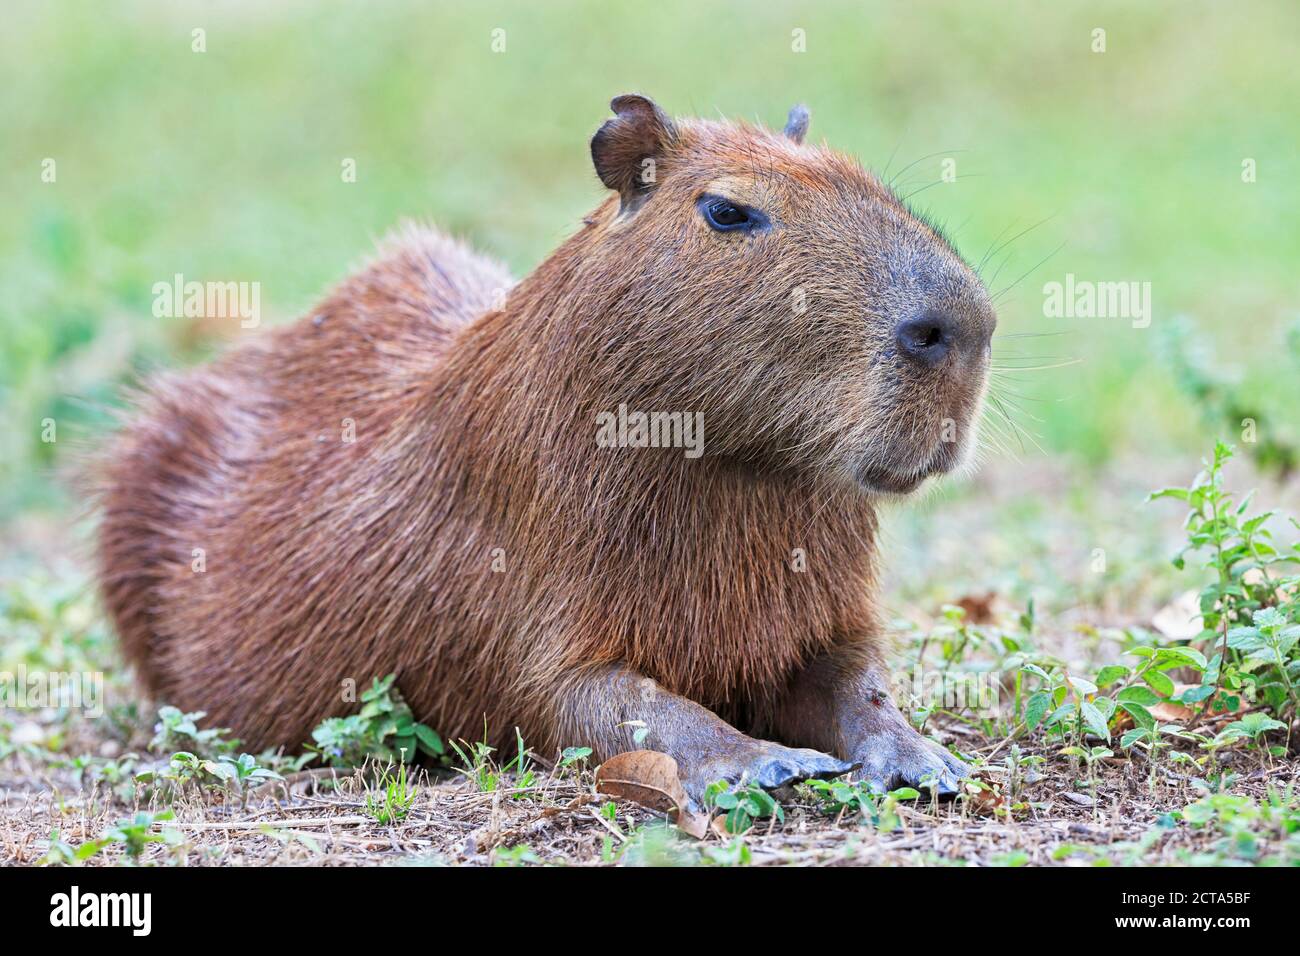 South America, Brasilia, Mato Grosso do Sul, Pantanal, Capybara, Hydrochoerus hydrochaeris Stock Photo